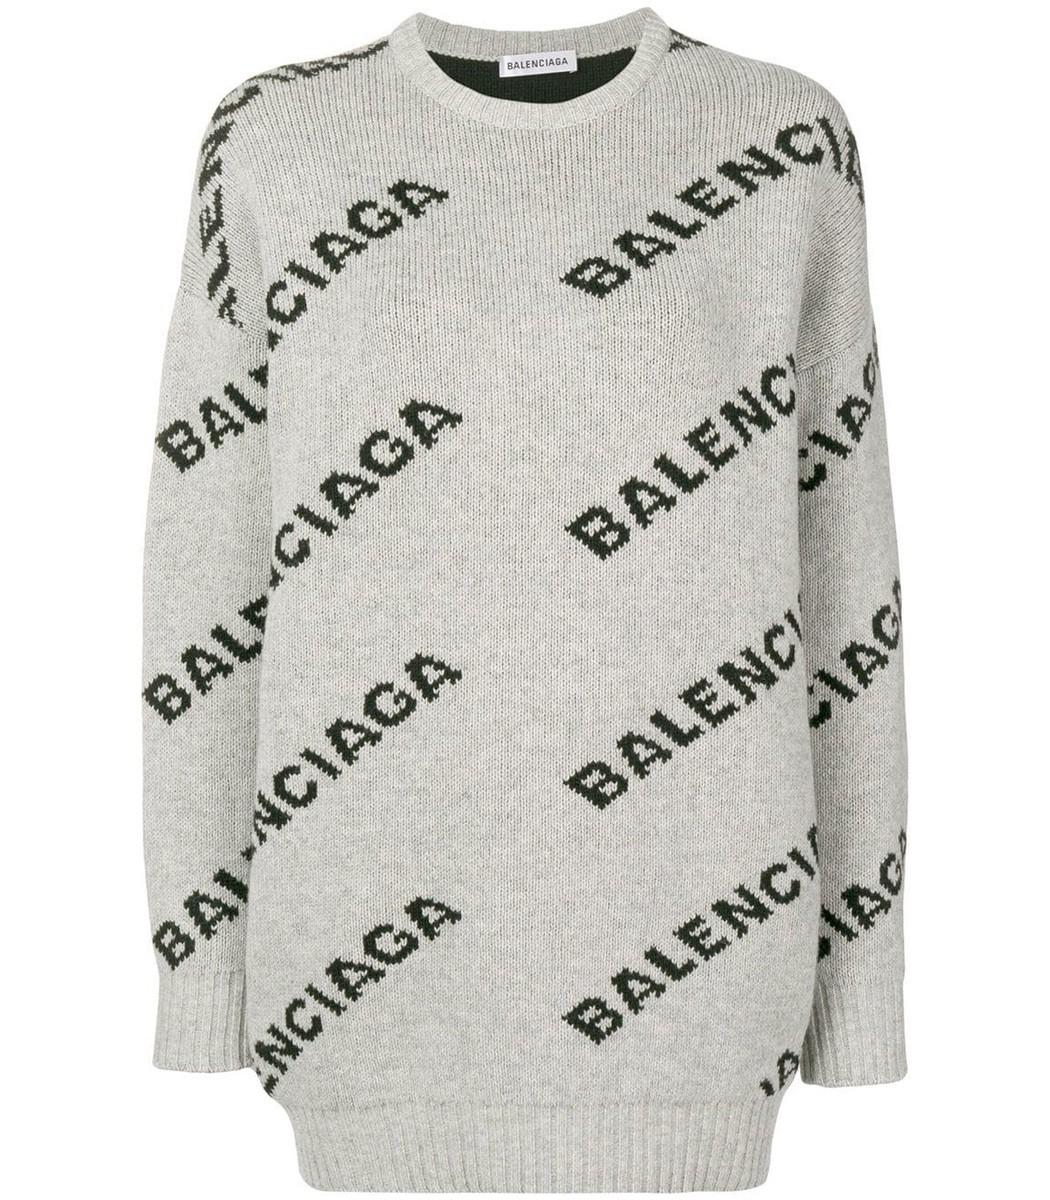 Balenciaga Wool Oversized Logo Knitted Jumper in Grey (Gray) - Lyst